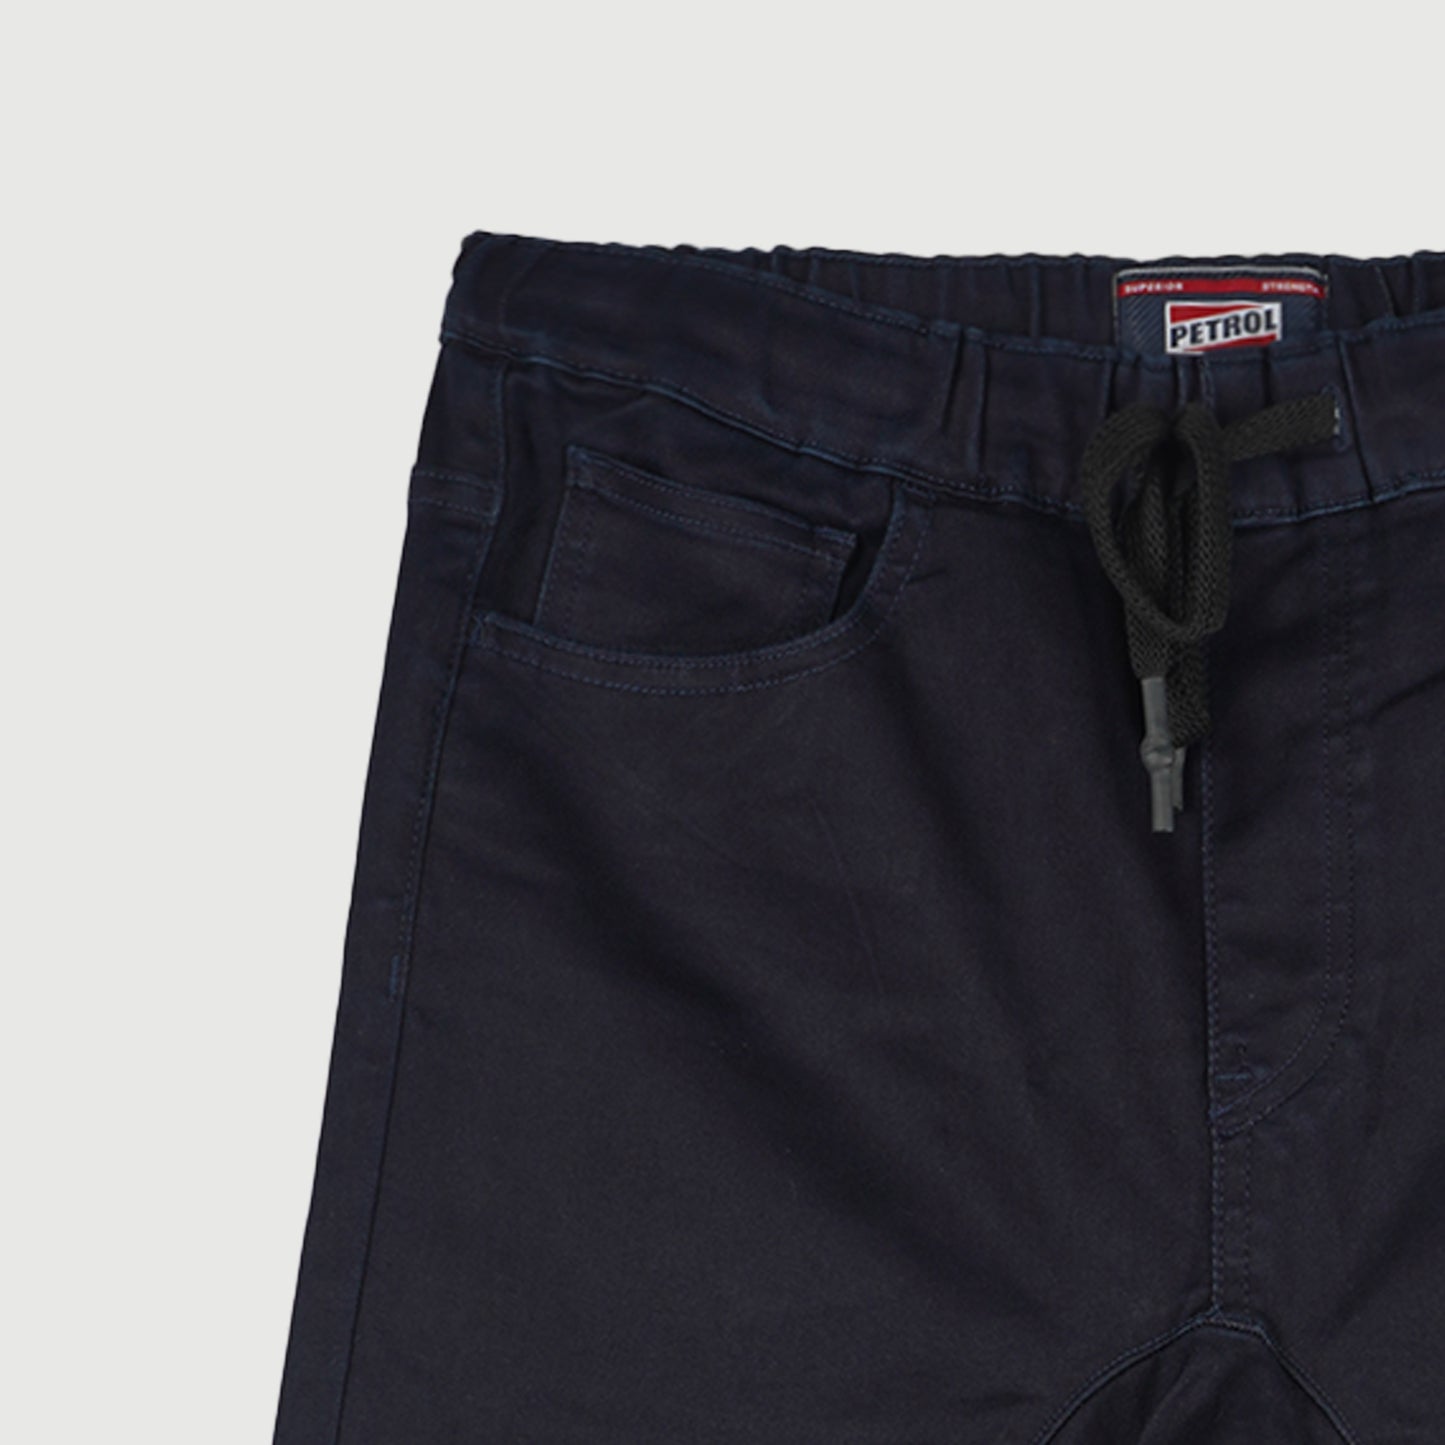 Petrol Basic Apparel Non-Denim Jogger Pants for Men Trendy Fashion With Pocket Regular Fitting Rinse wash Fabric Casual Jogger pants for Men 150698-U (Dark Shade)